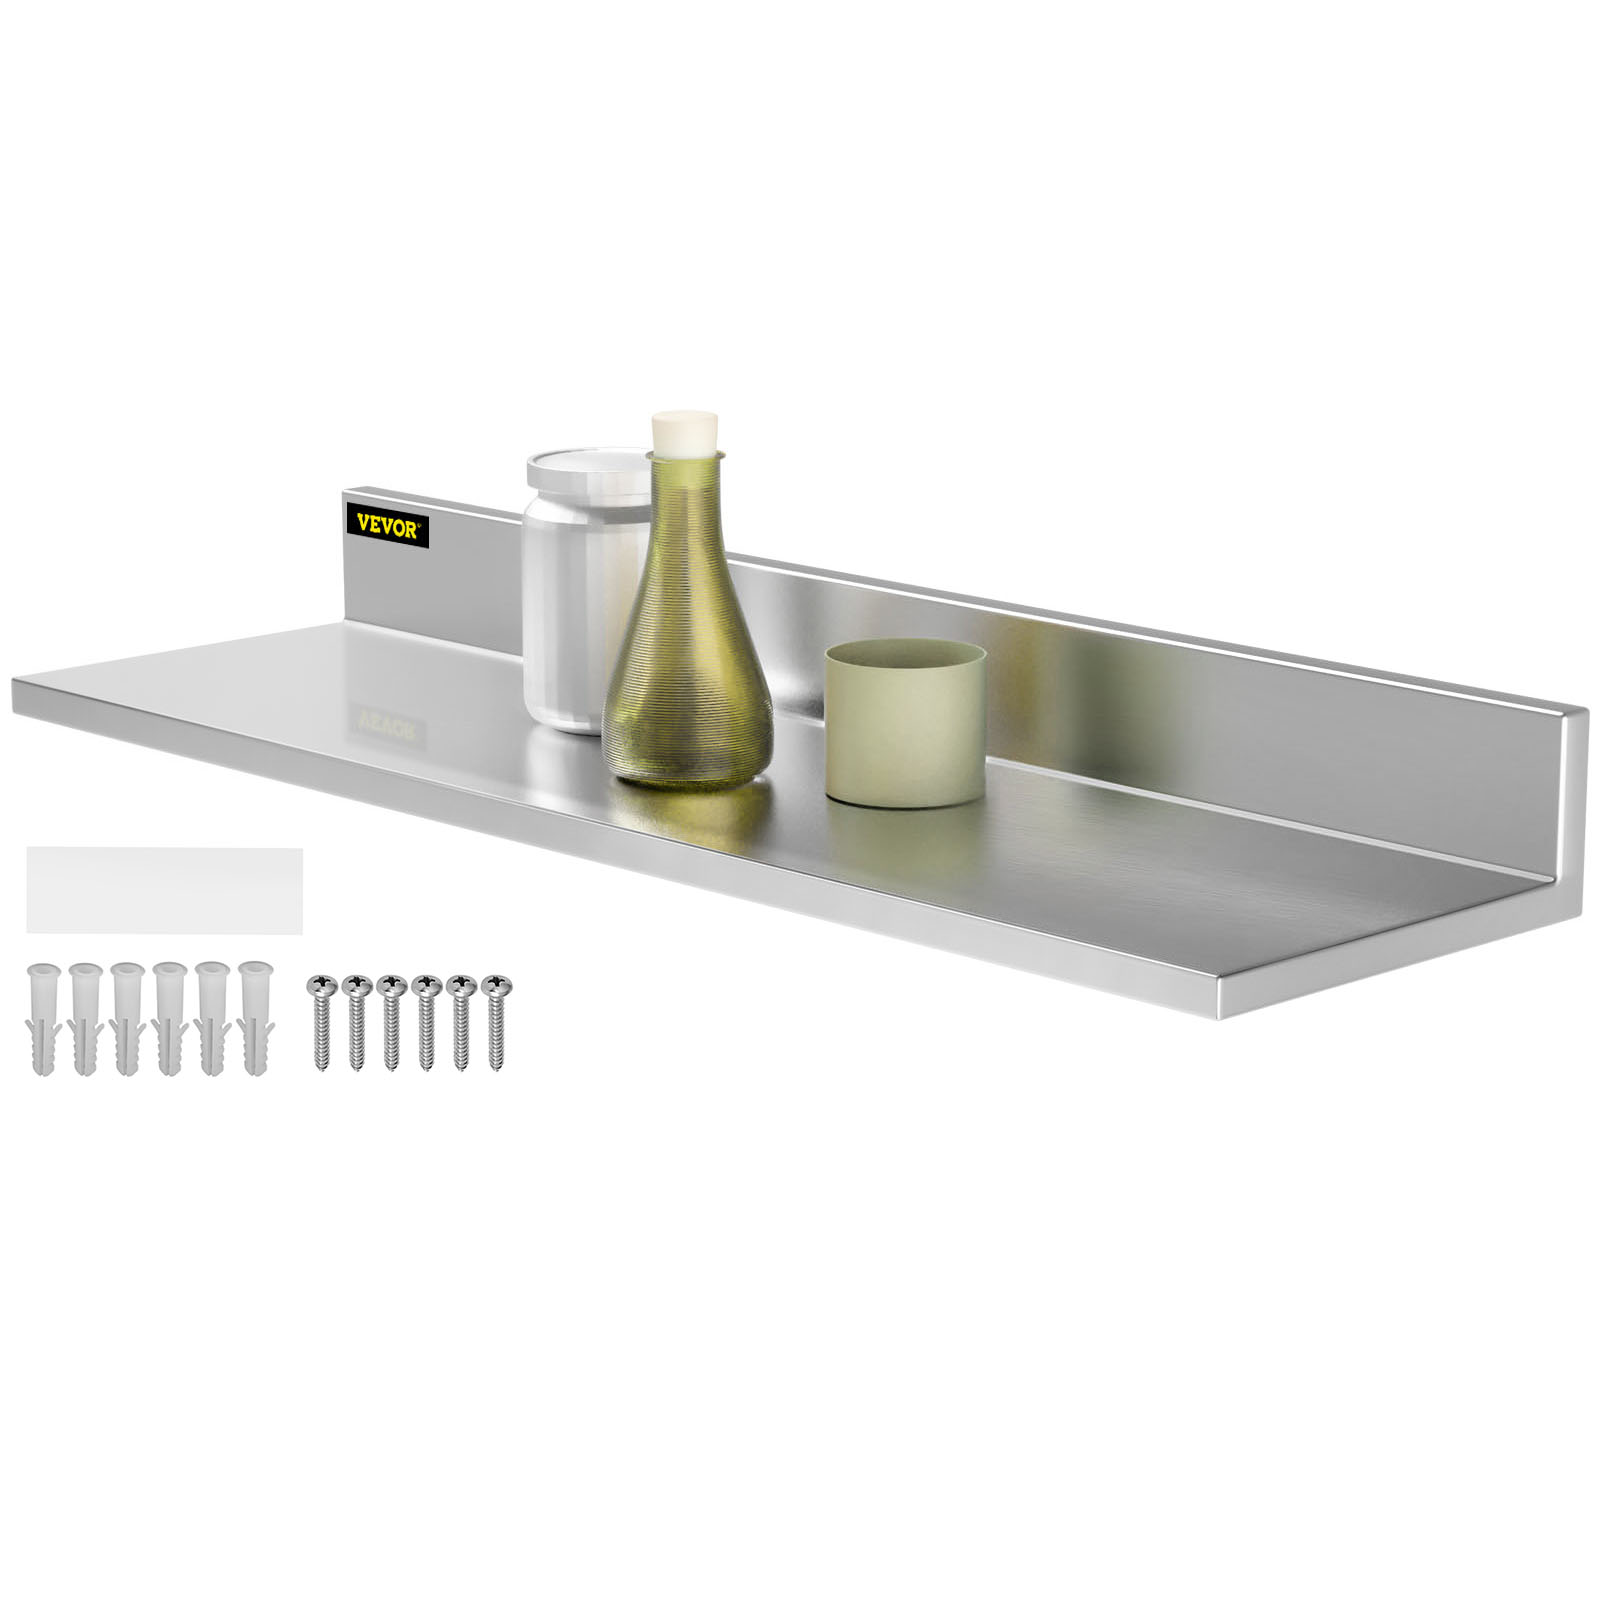 VEVOR Stainless Steel Wall Shelf Commercial Kitchen Shelf 8.6'' x 30'' 1pc Home от Vevor Many GEOs